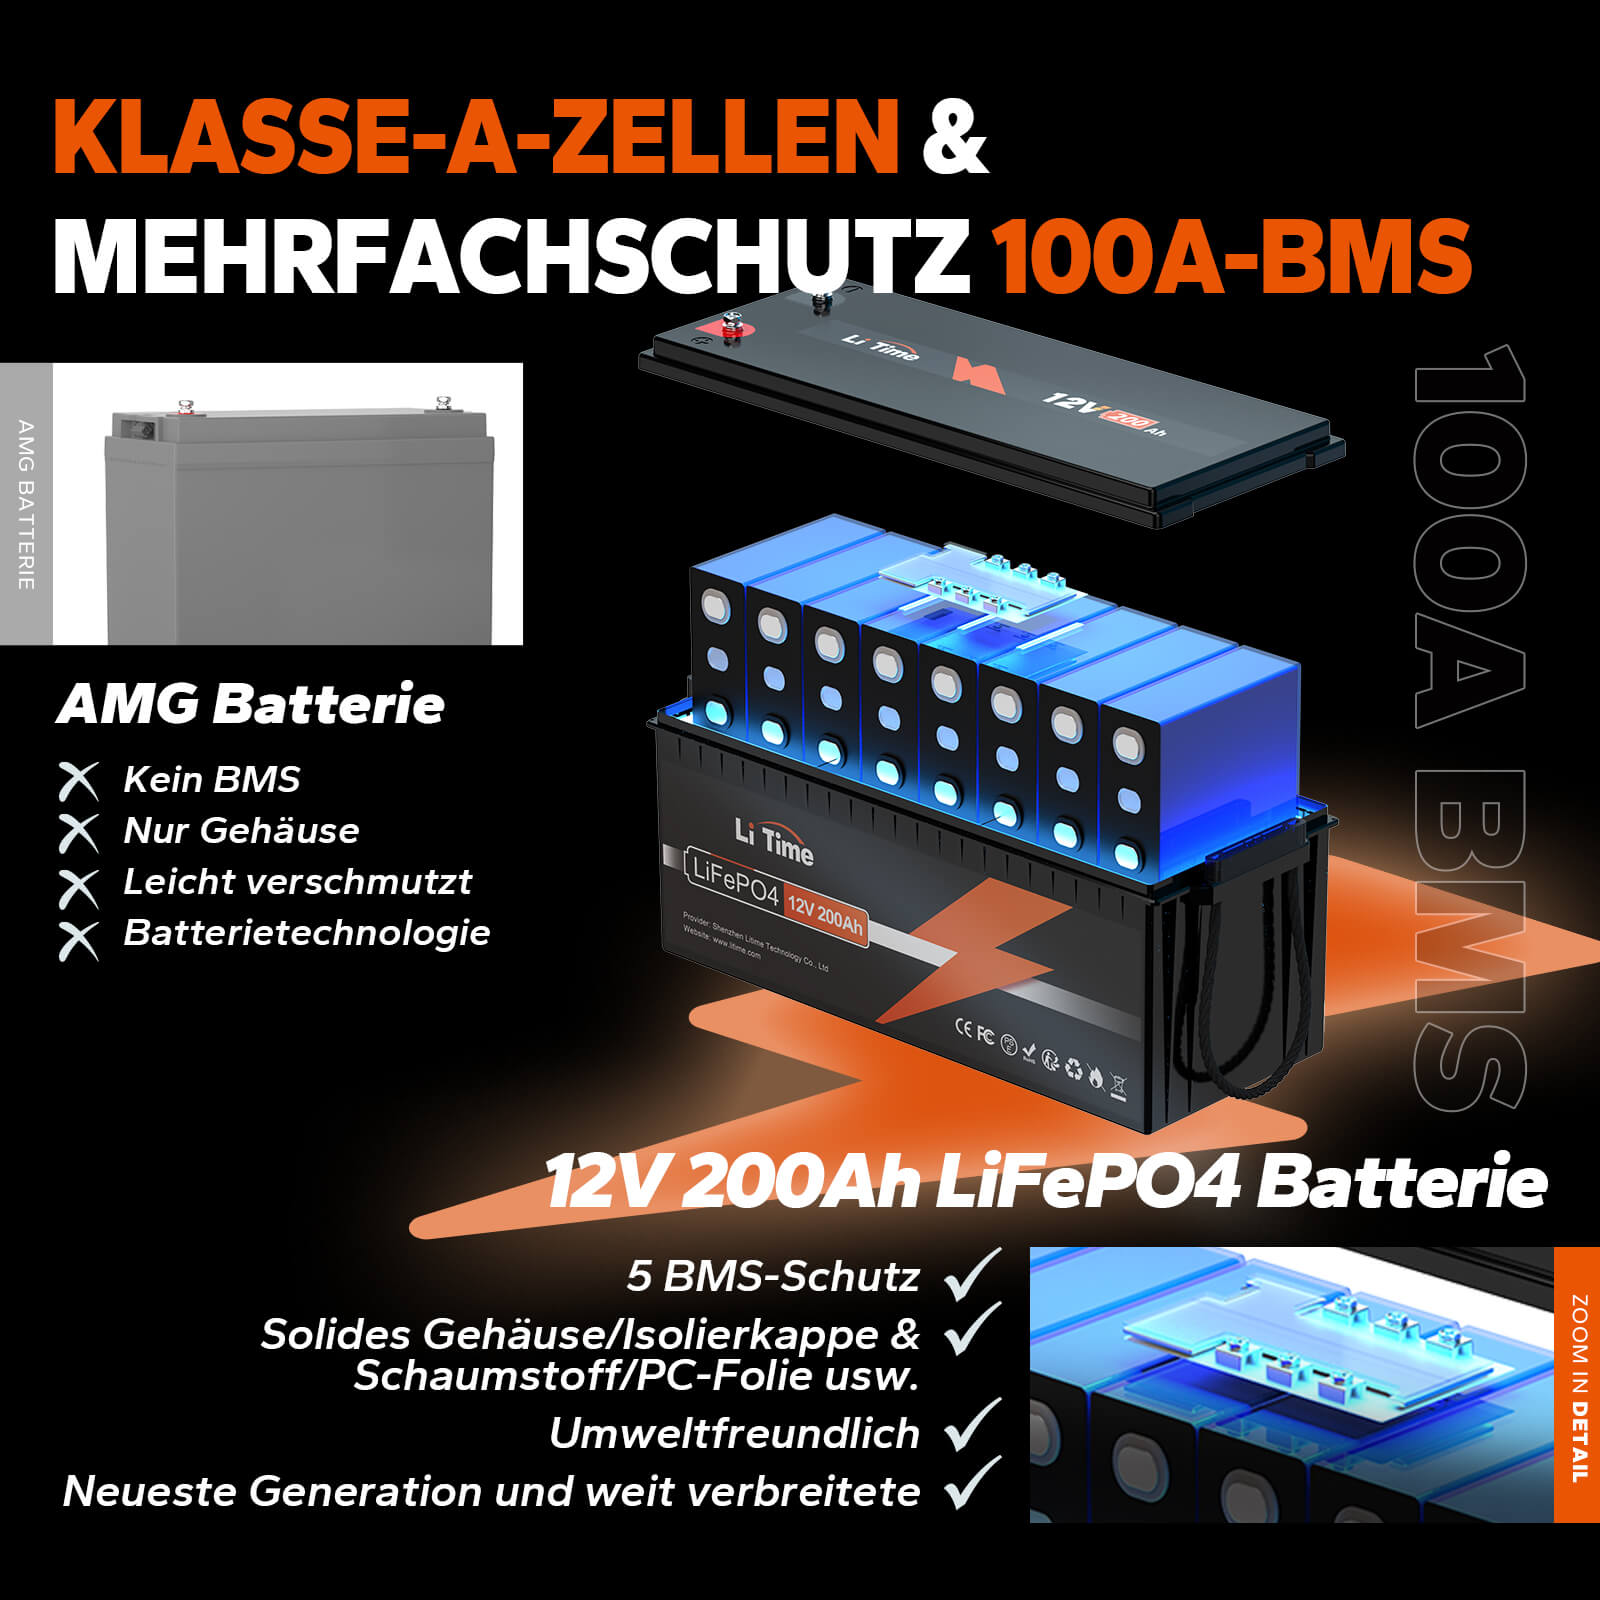  LiTime 12V 200Ah LiFePO4 Lithium Batterie 1/2 weniger Platzbedarf & 72% geringeres Gewicht